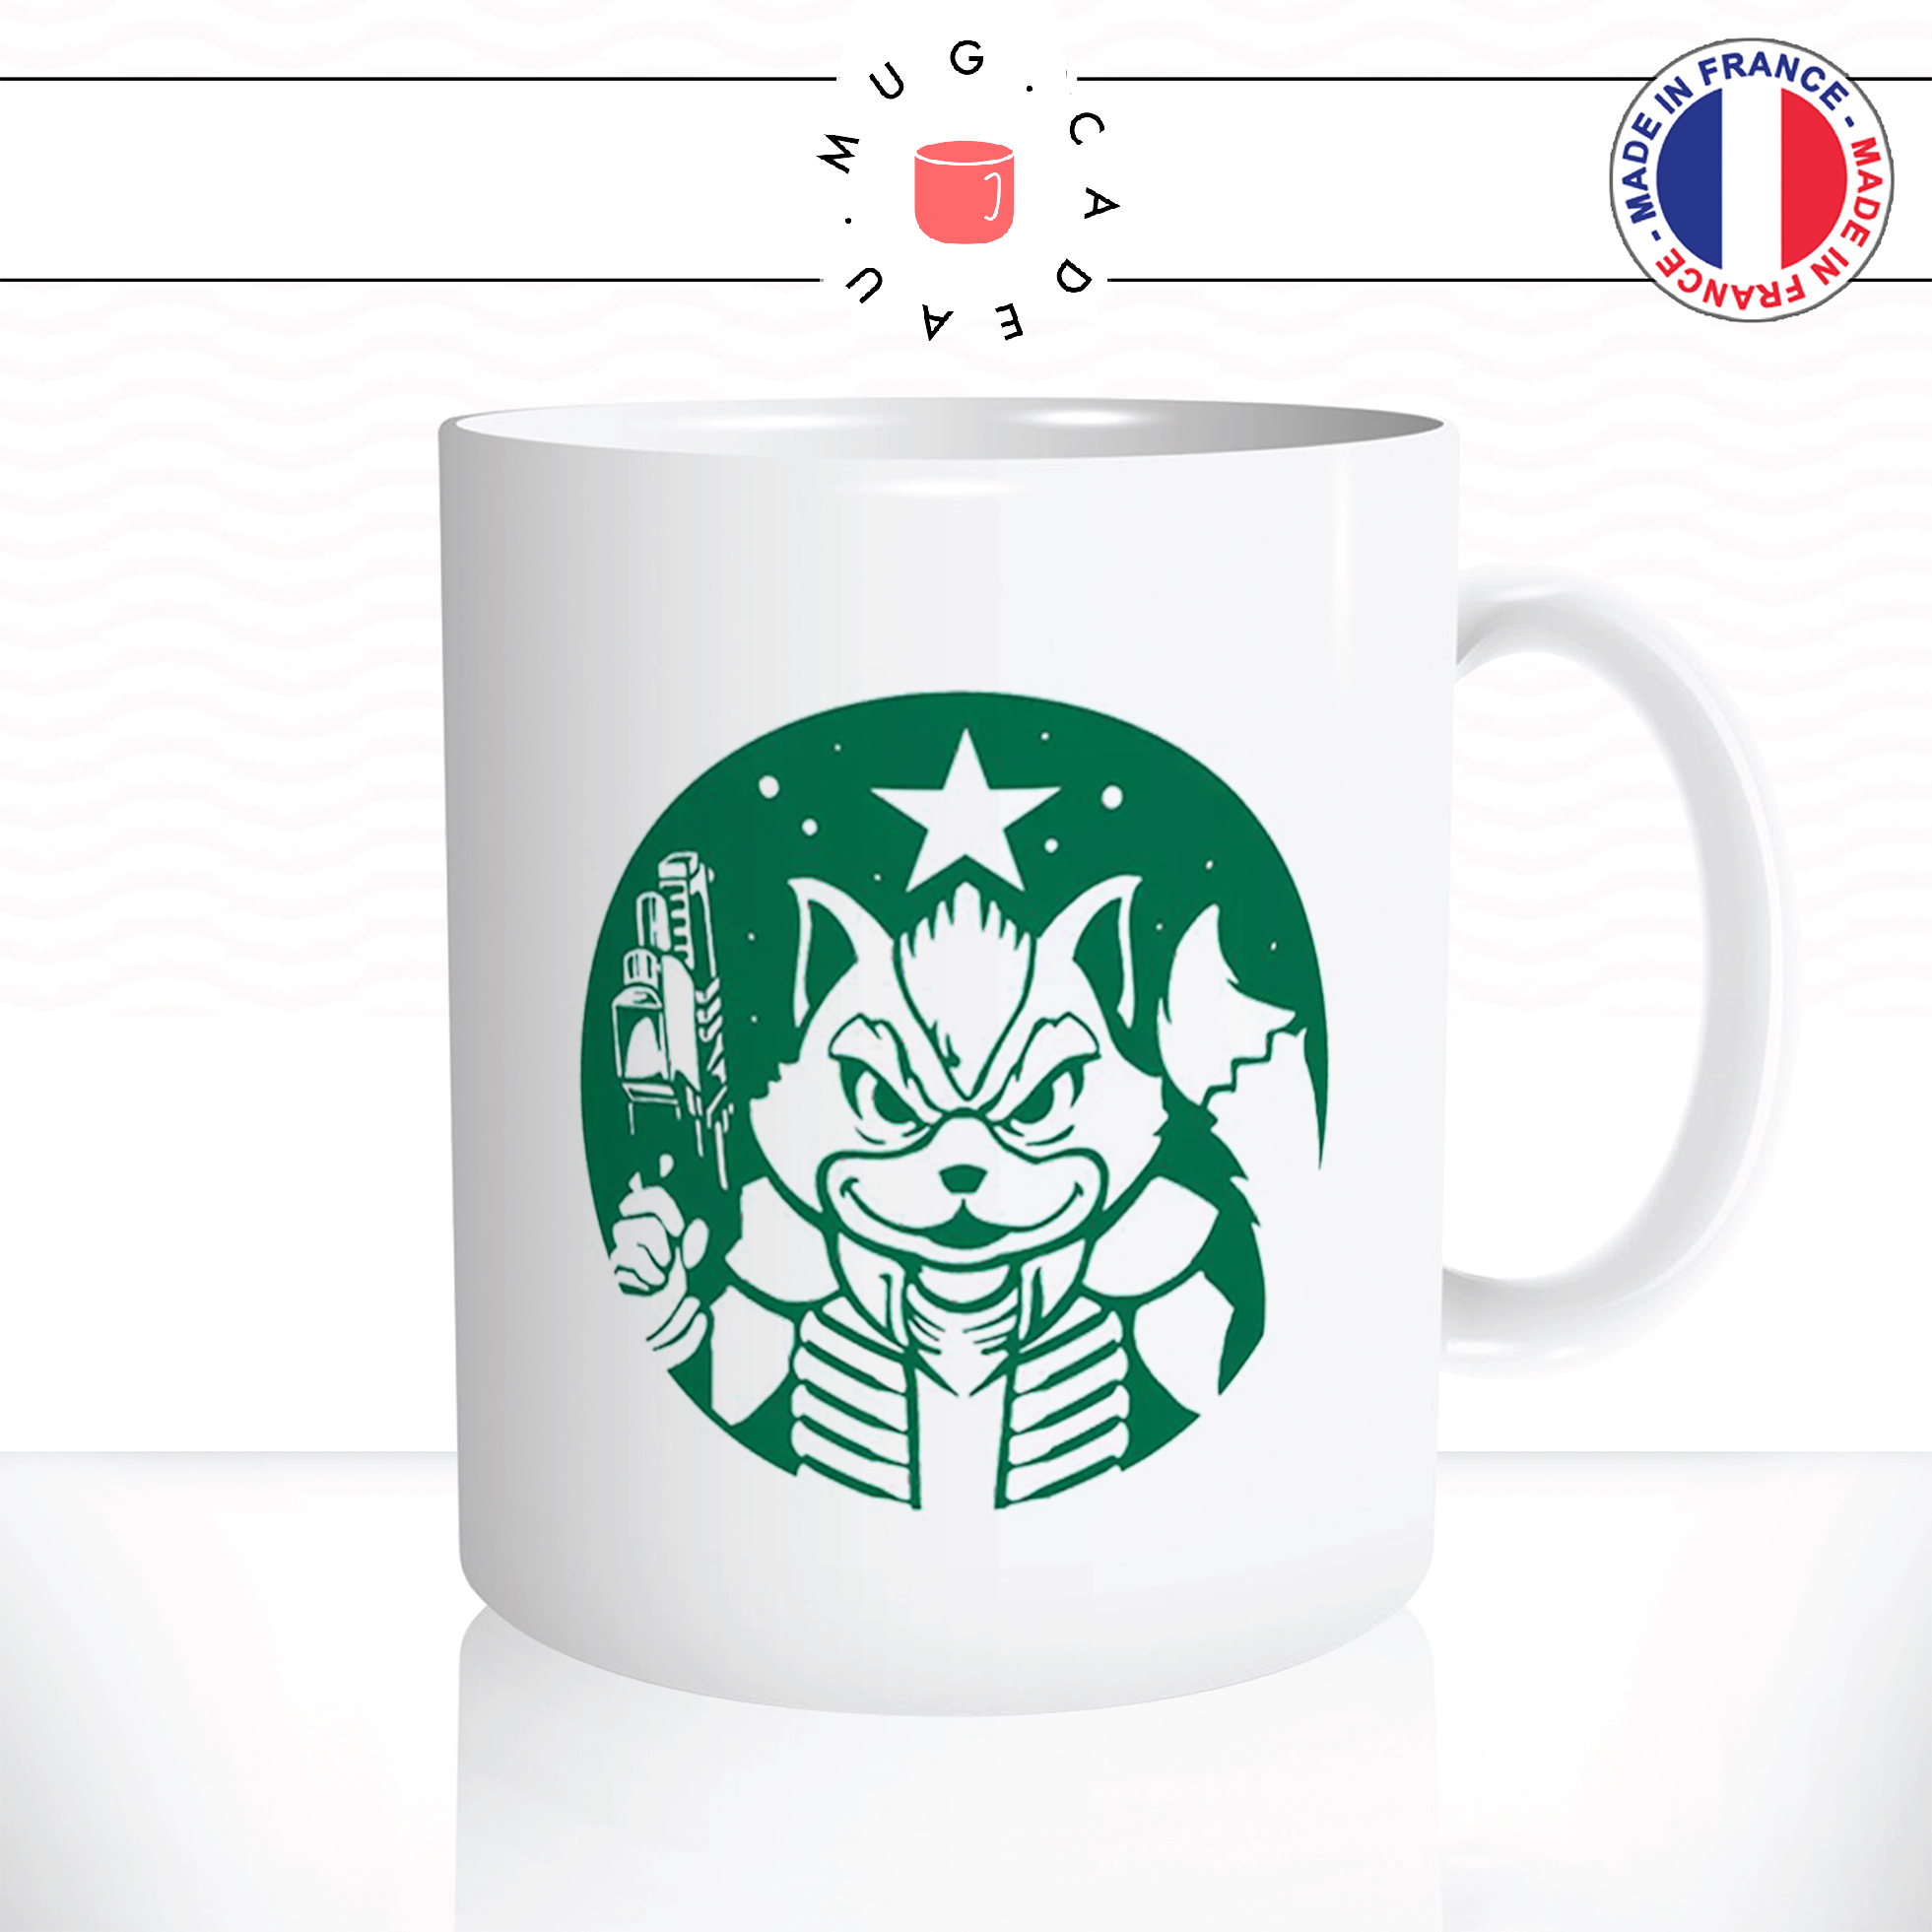 mug-tasse-ref4-gardiens-galaxie-rocket-racoon-vert-logo-rond-starbucks-cafe-the-lugs-tasses-personnalise-anse-droite